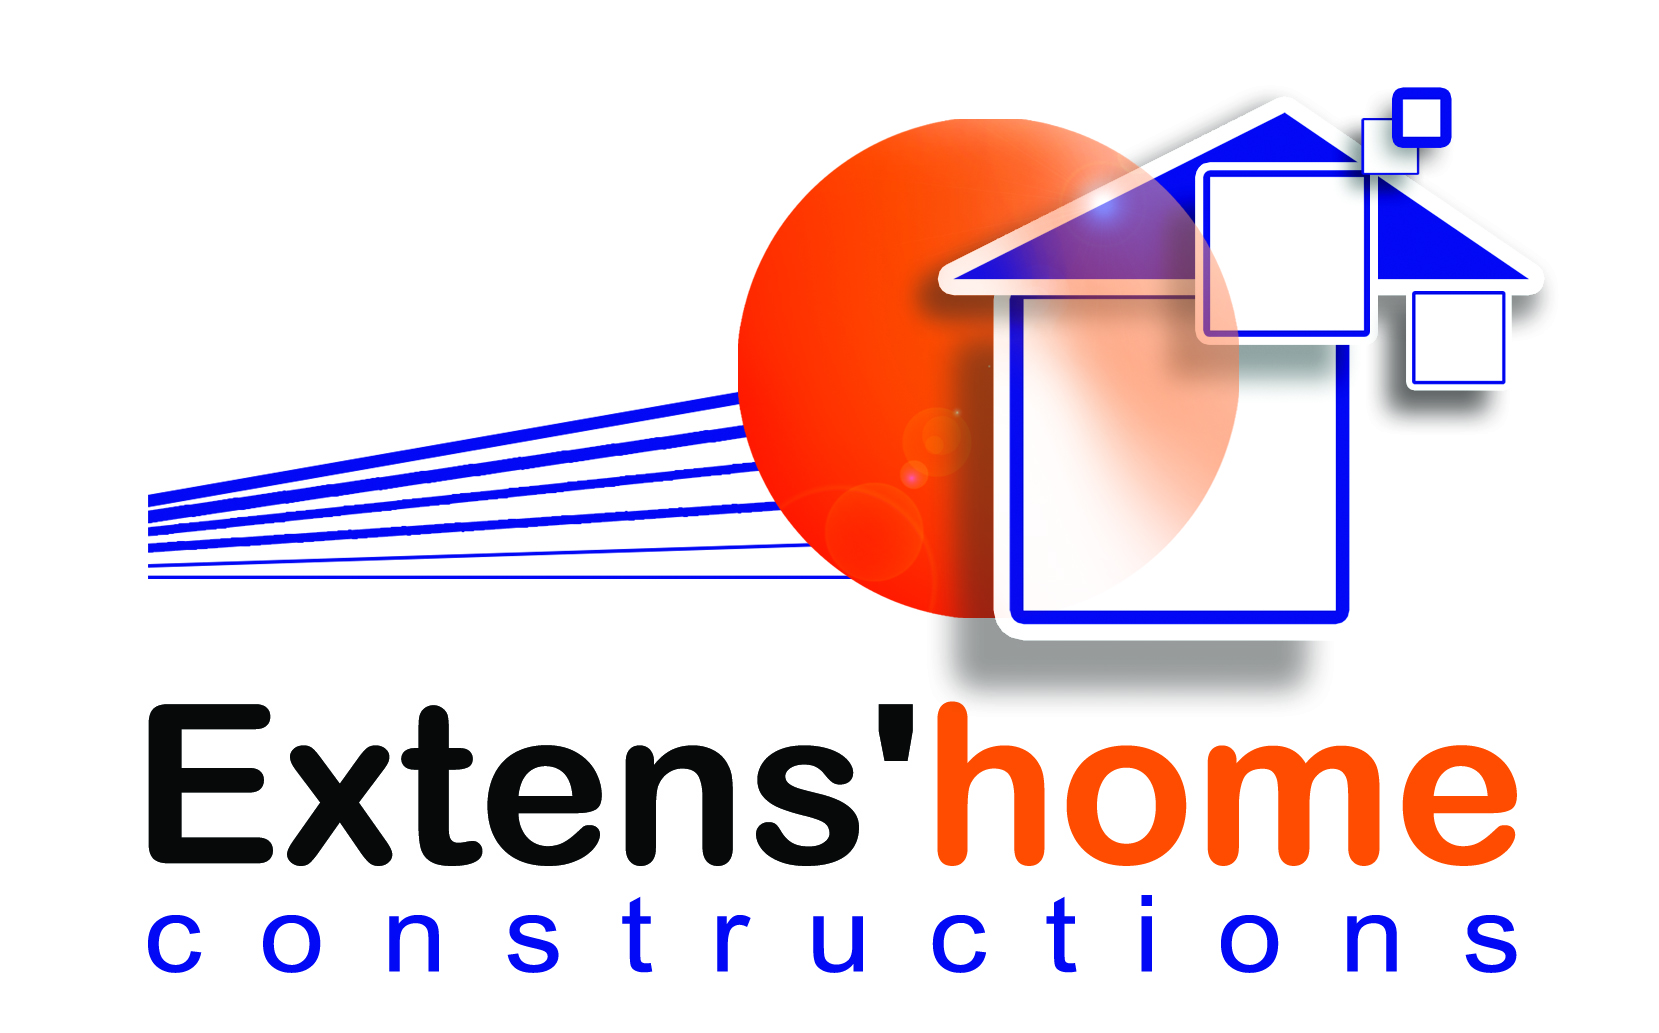 Extens'home constructions